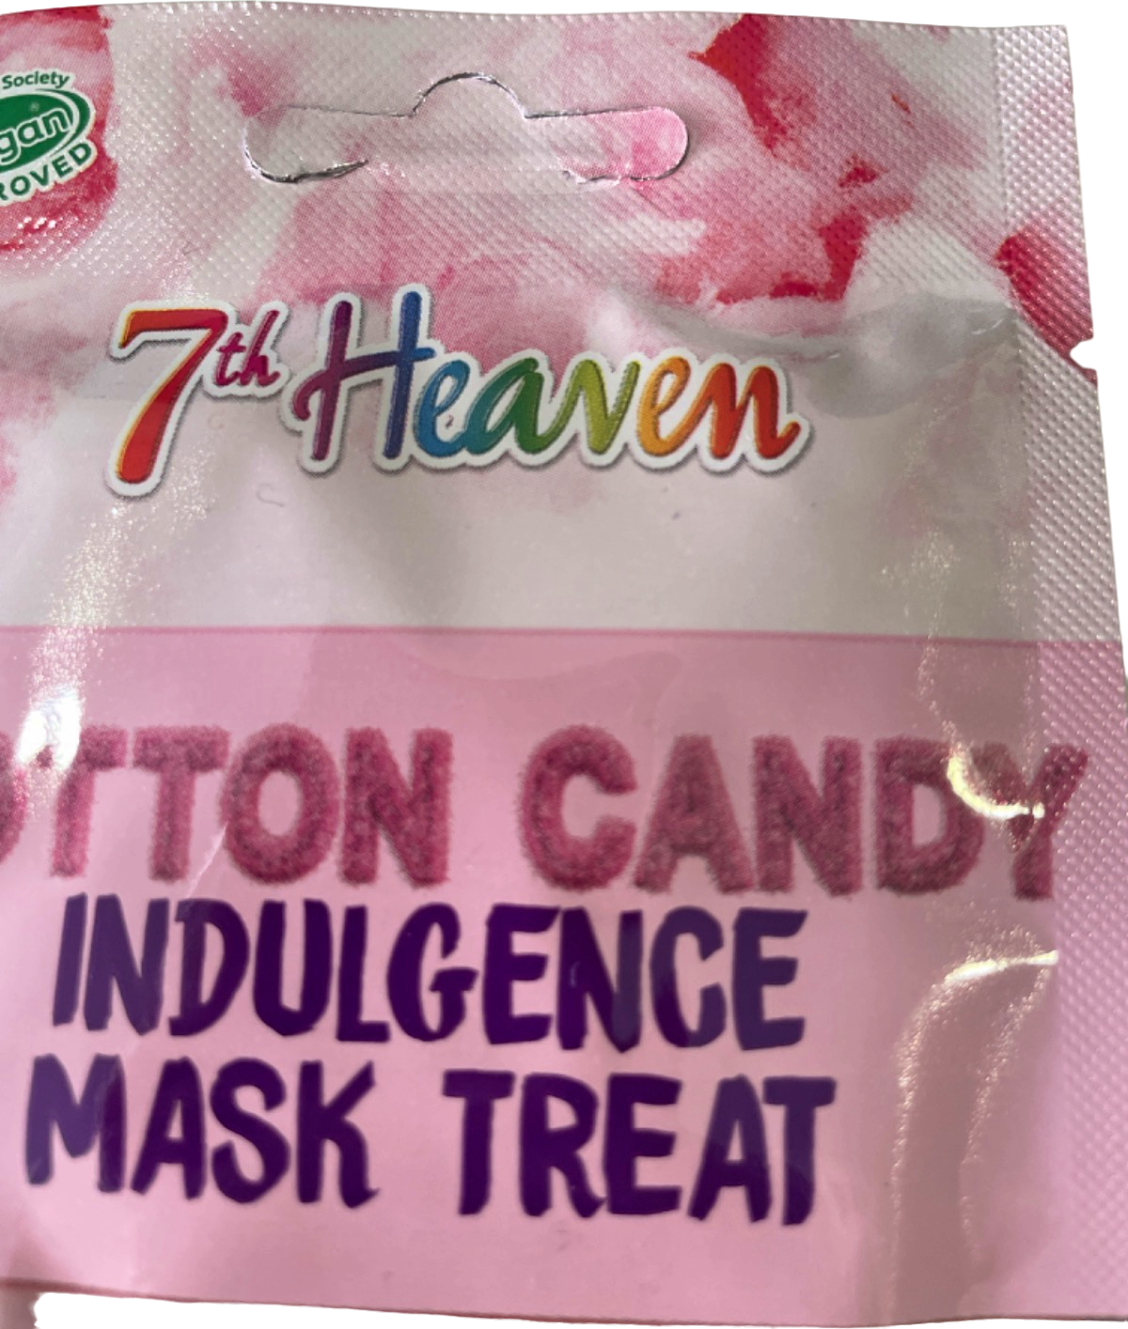 7th Heaven Cotton Candy Indulgence Mask Treat